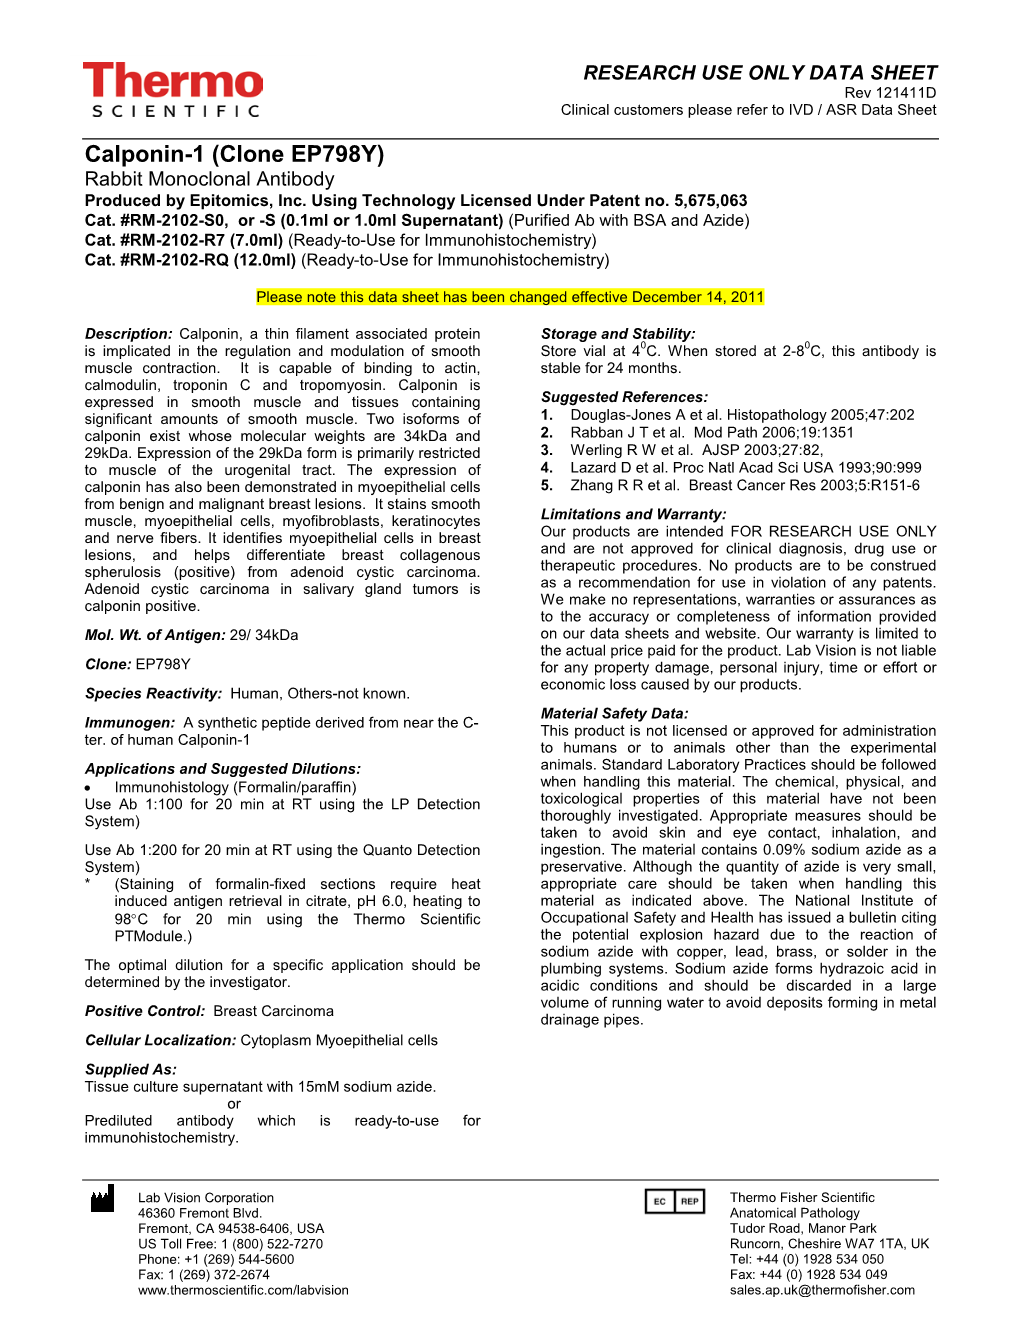 Calponin-1 (Clone EP798Y) Rabbit Monoclonal Antibody Produced by Epitomics, Inc